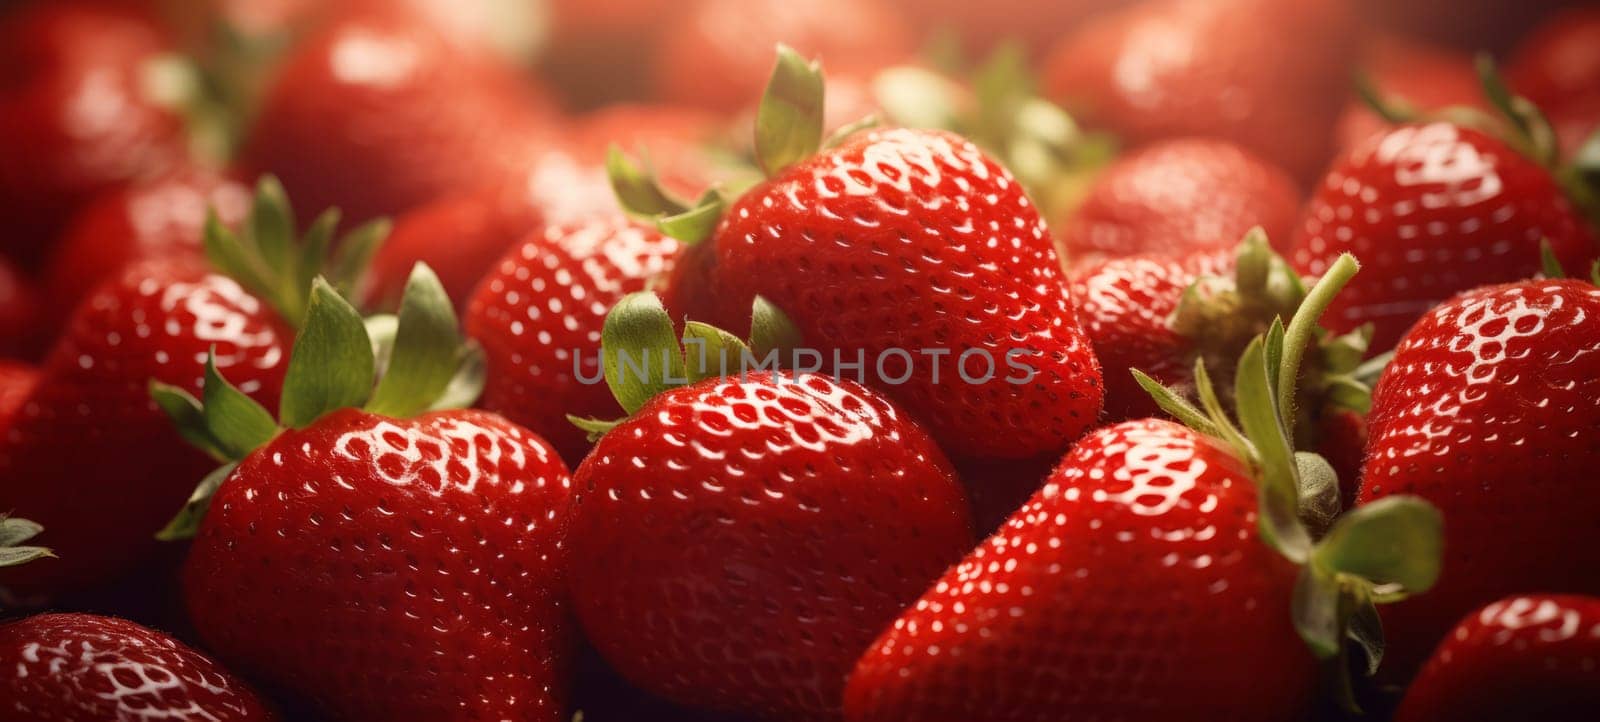 Strawberries background. Strawberry Food background by NataliPopova